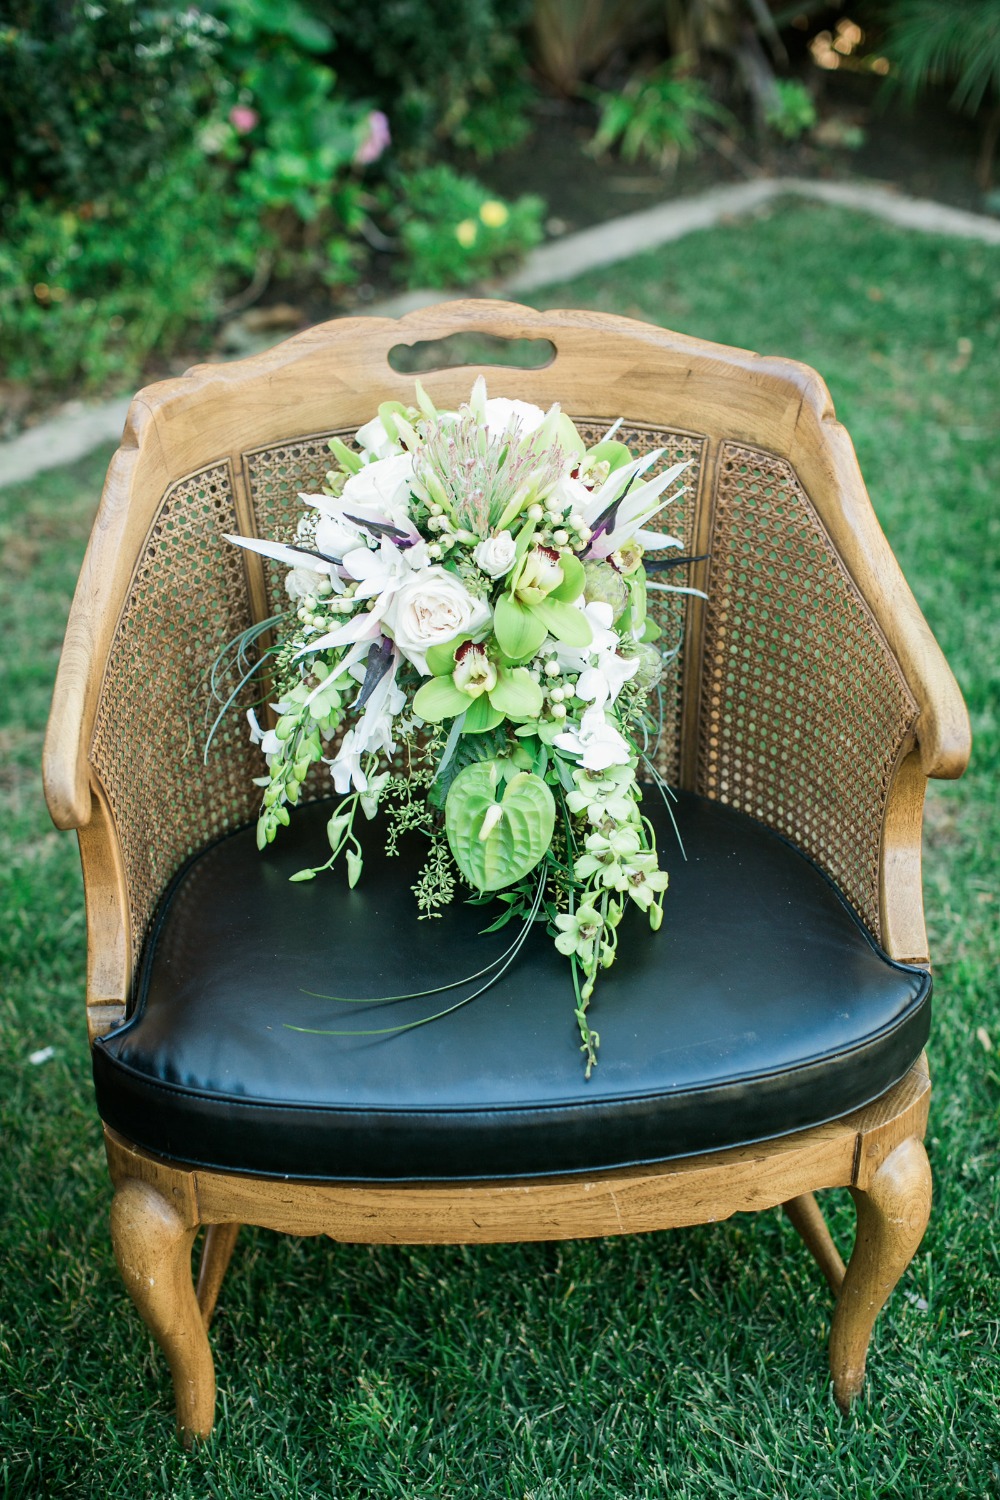 Tropical wedding bouquet